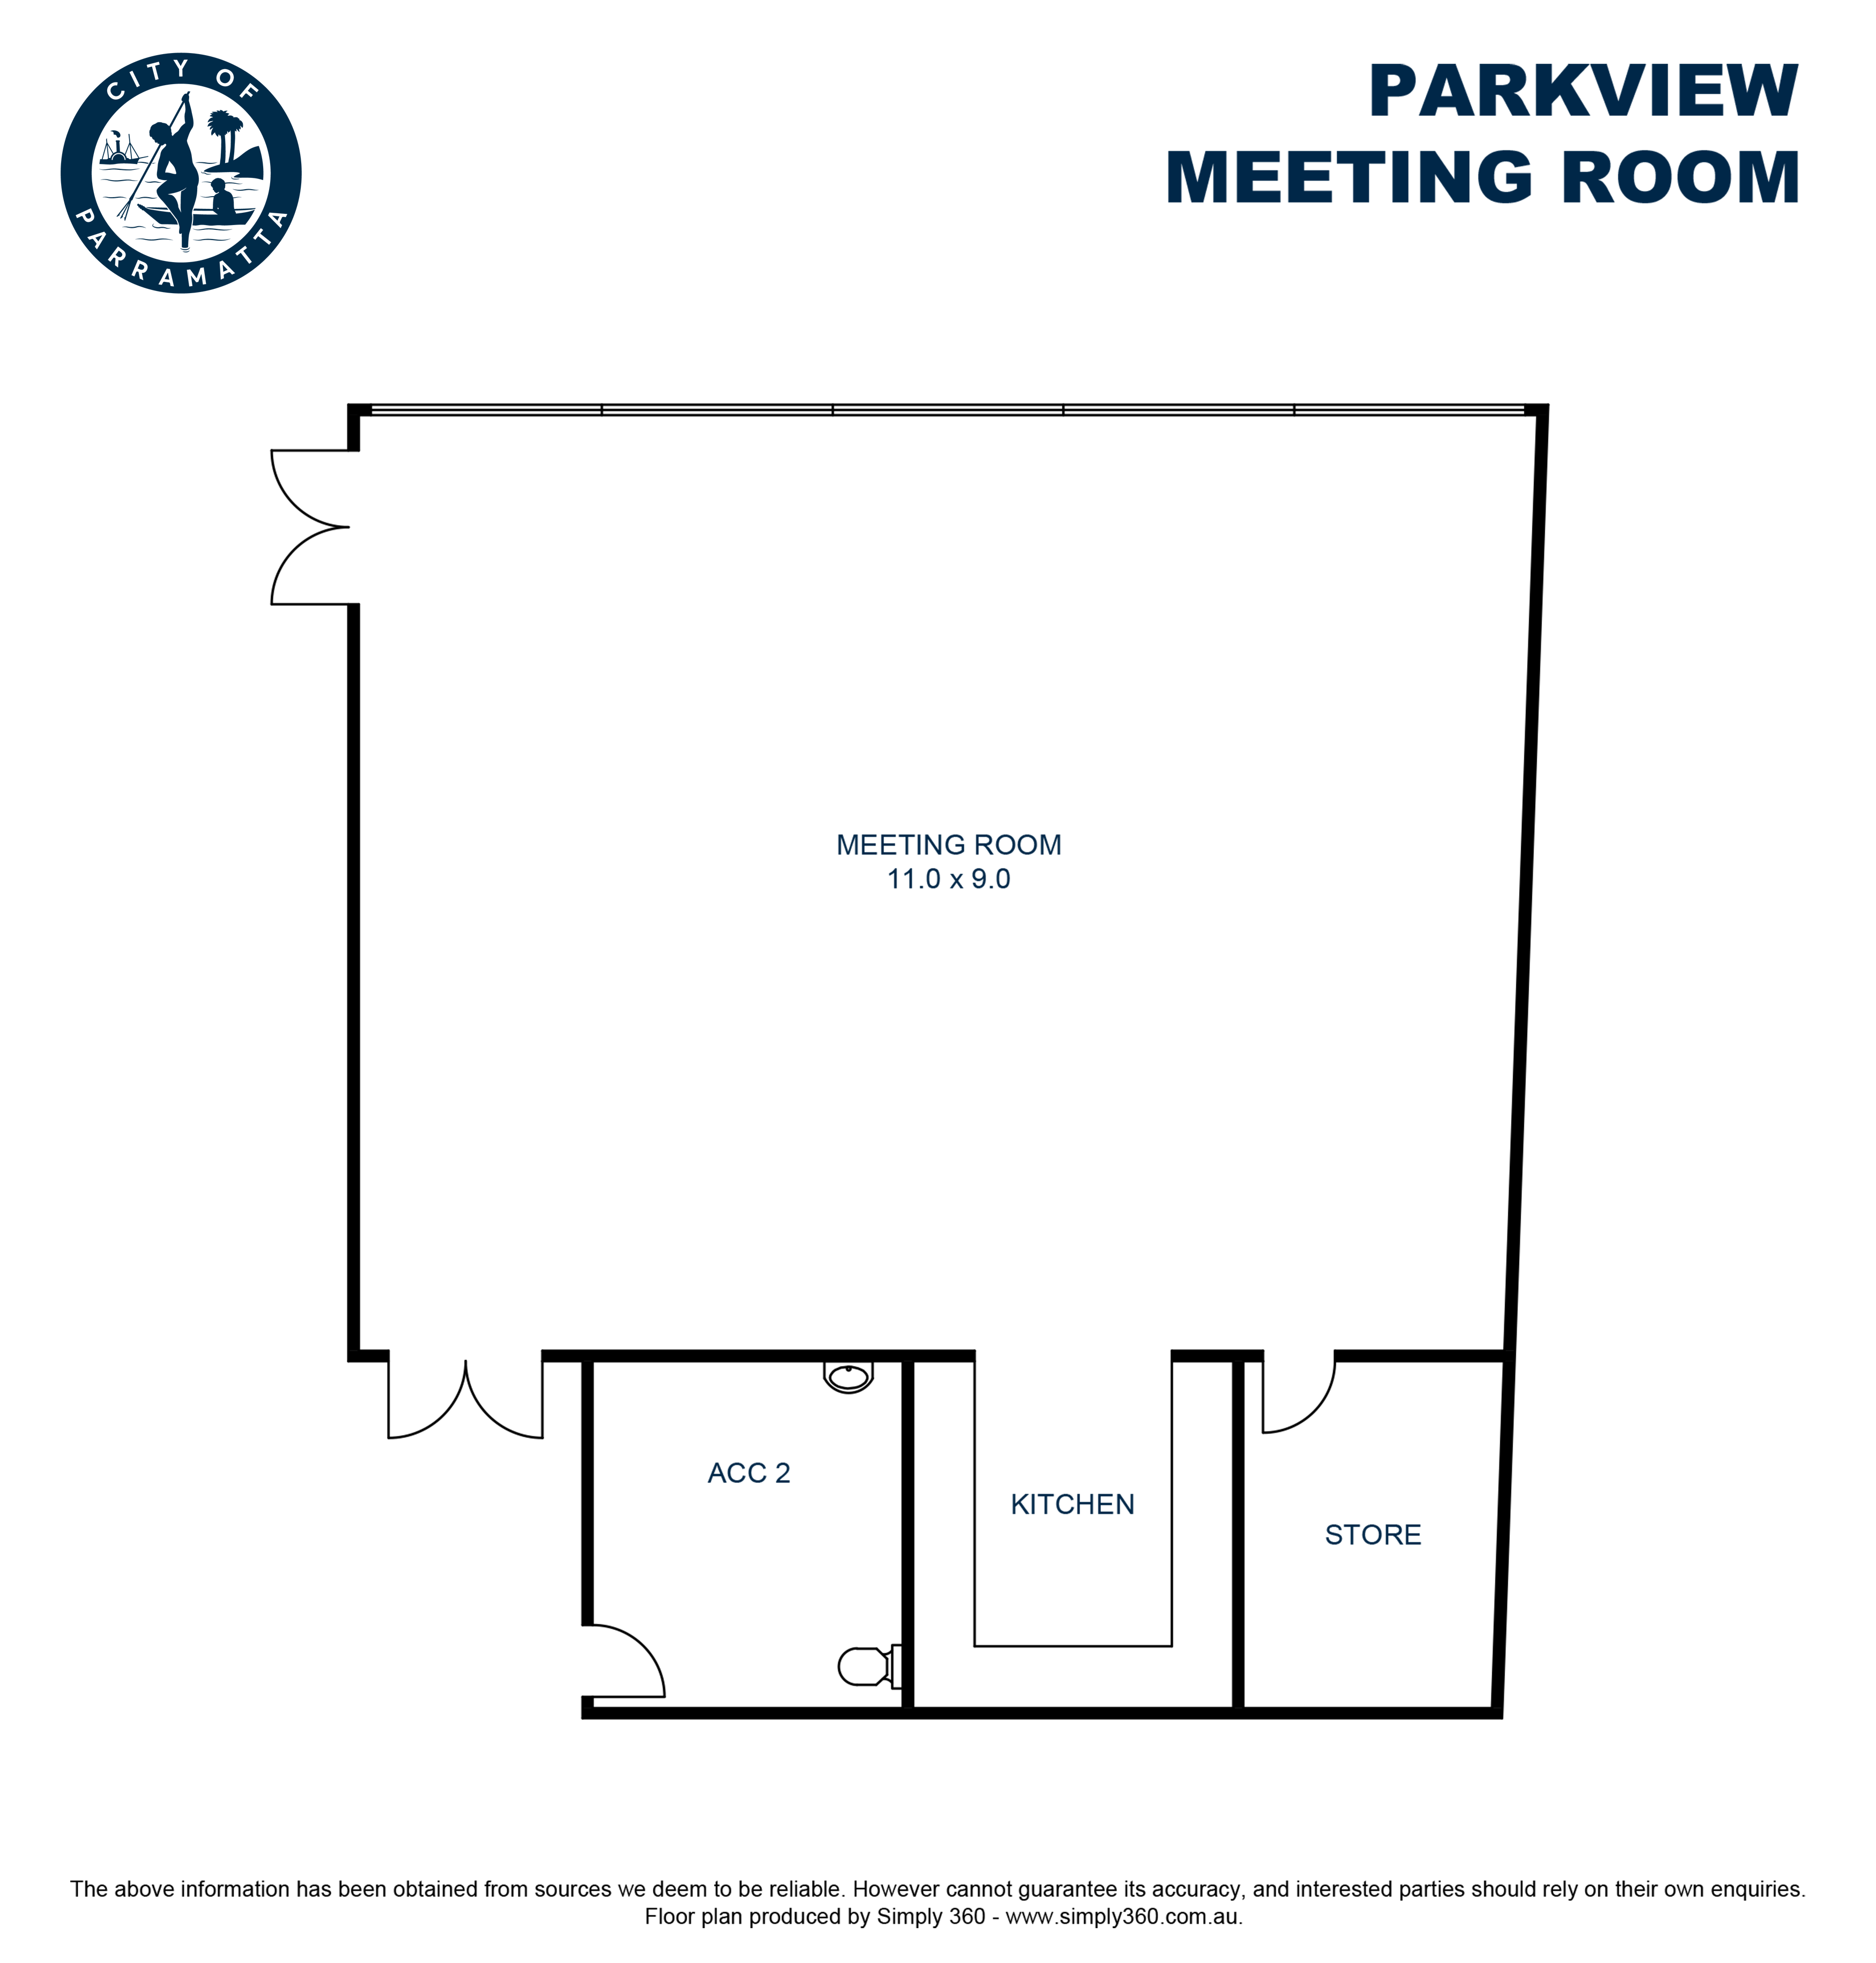 Parkview Meeting Room floor plan